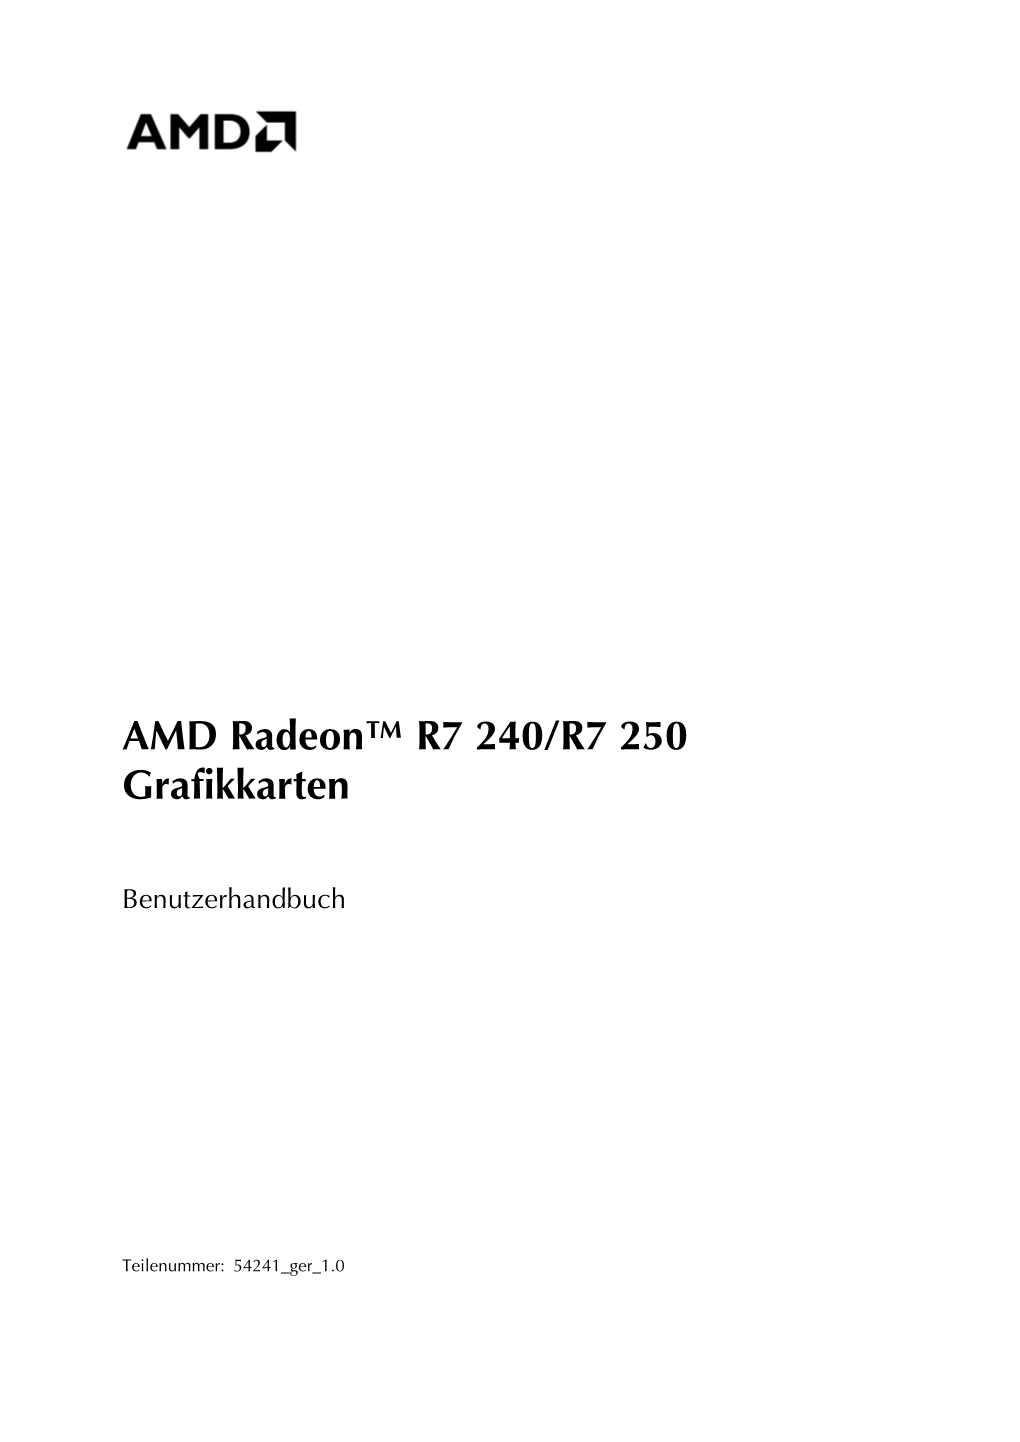 AMD Radeon™ R7 240/R7 250 Grafikkarten